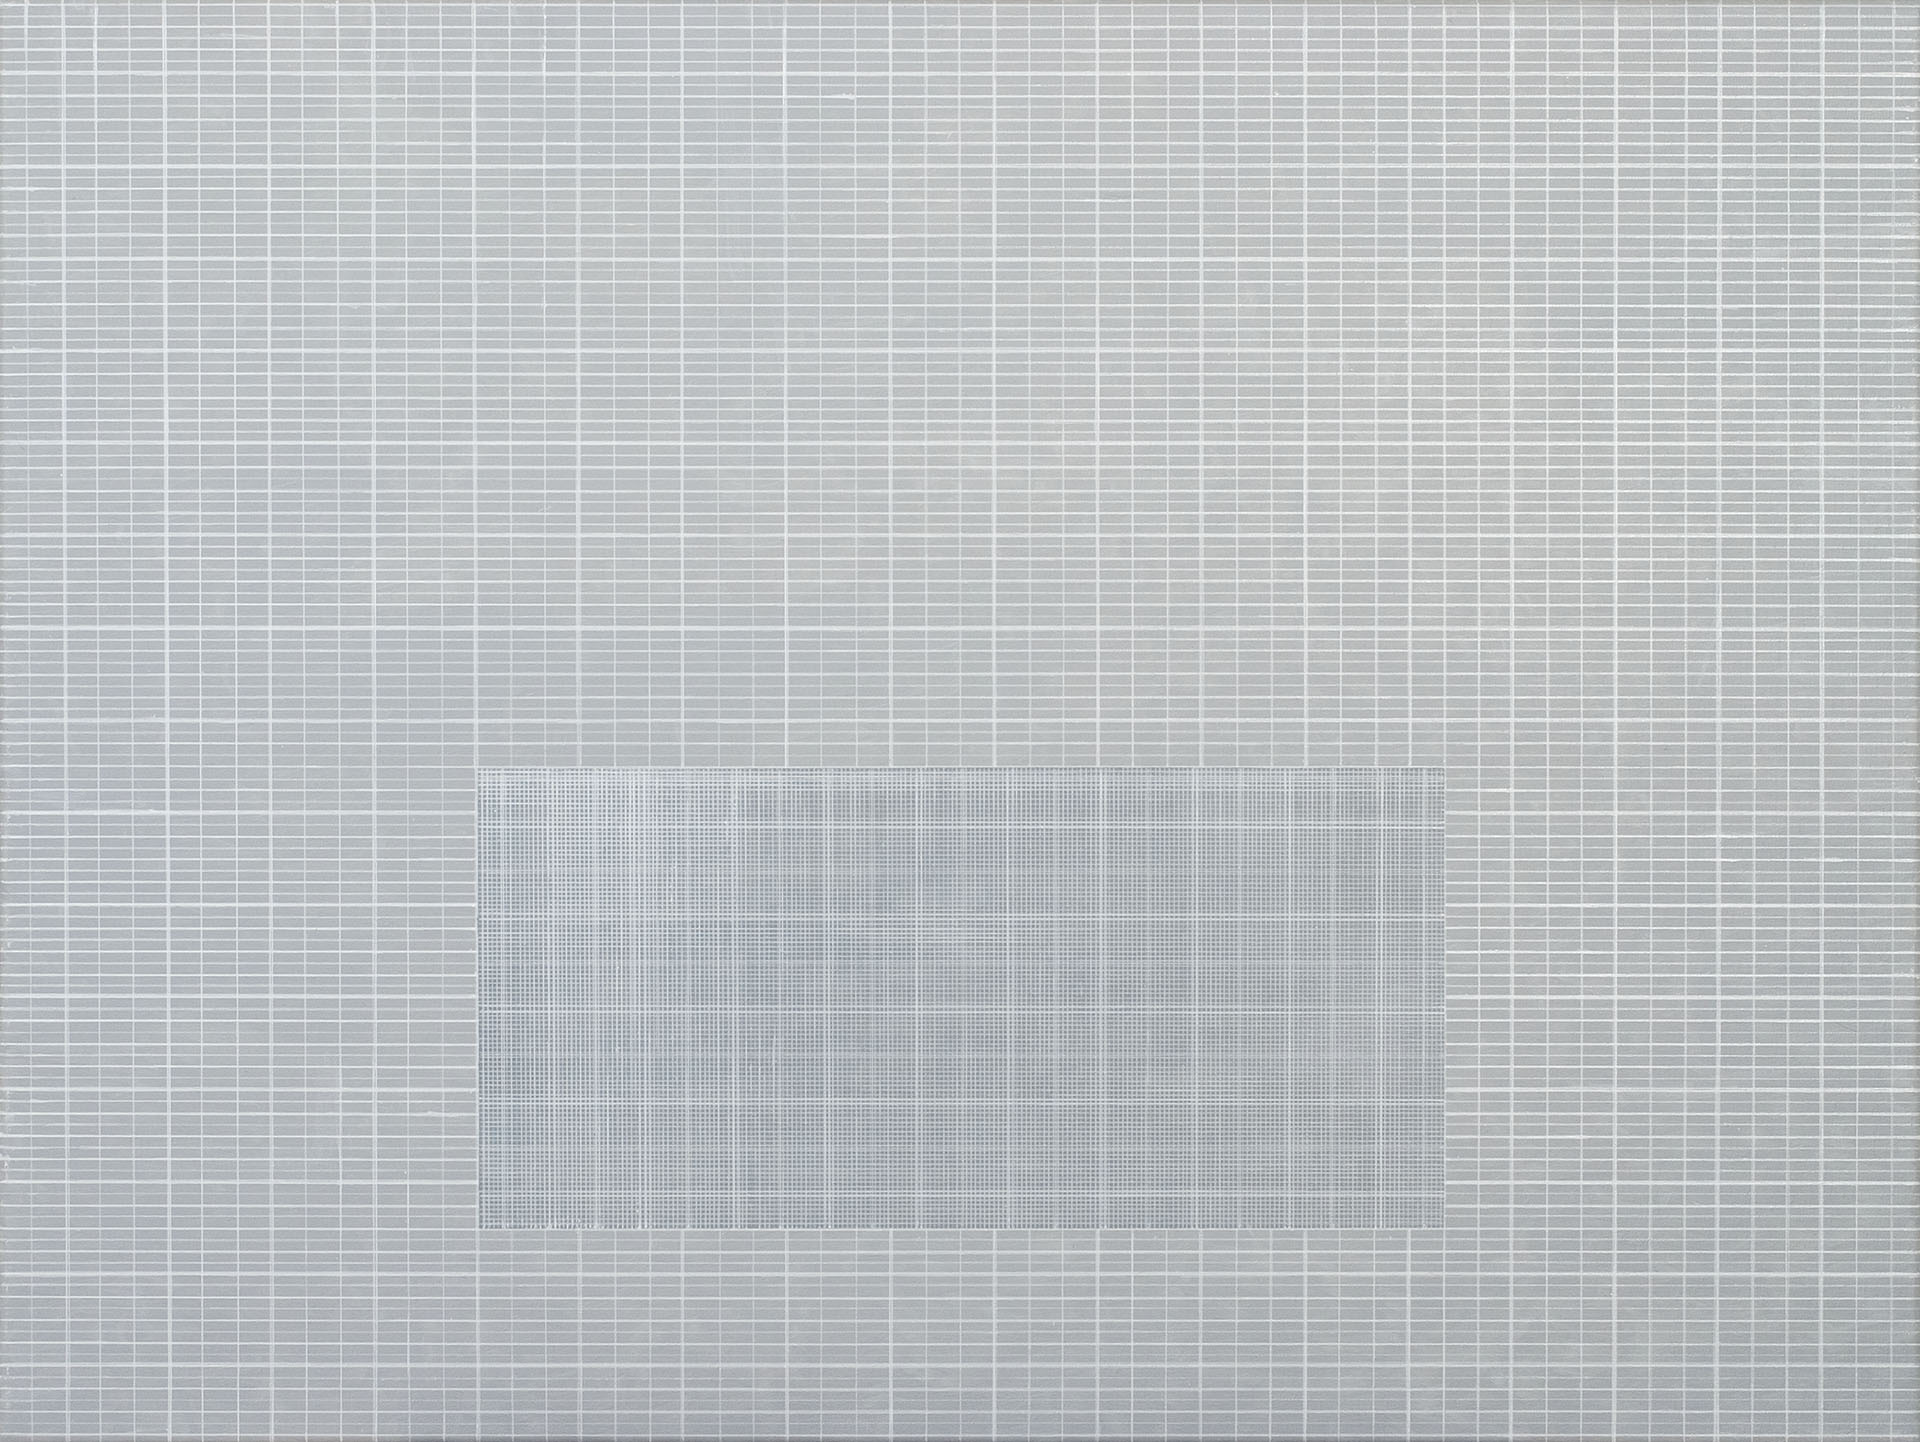 Grid 12, 2013, acrylic on linen, 630 x 840mm